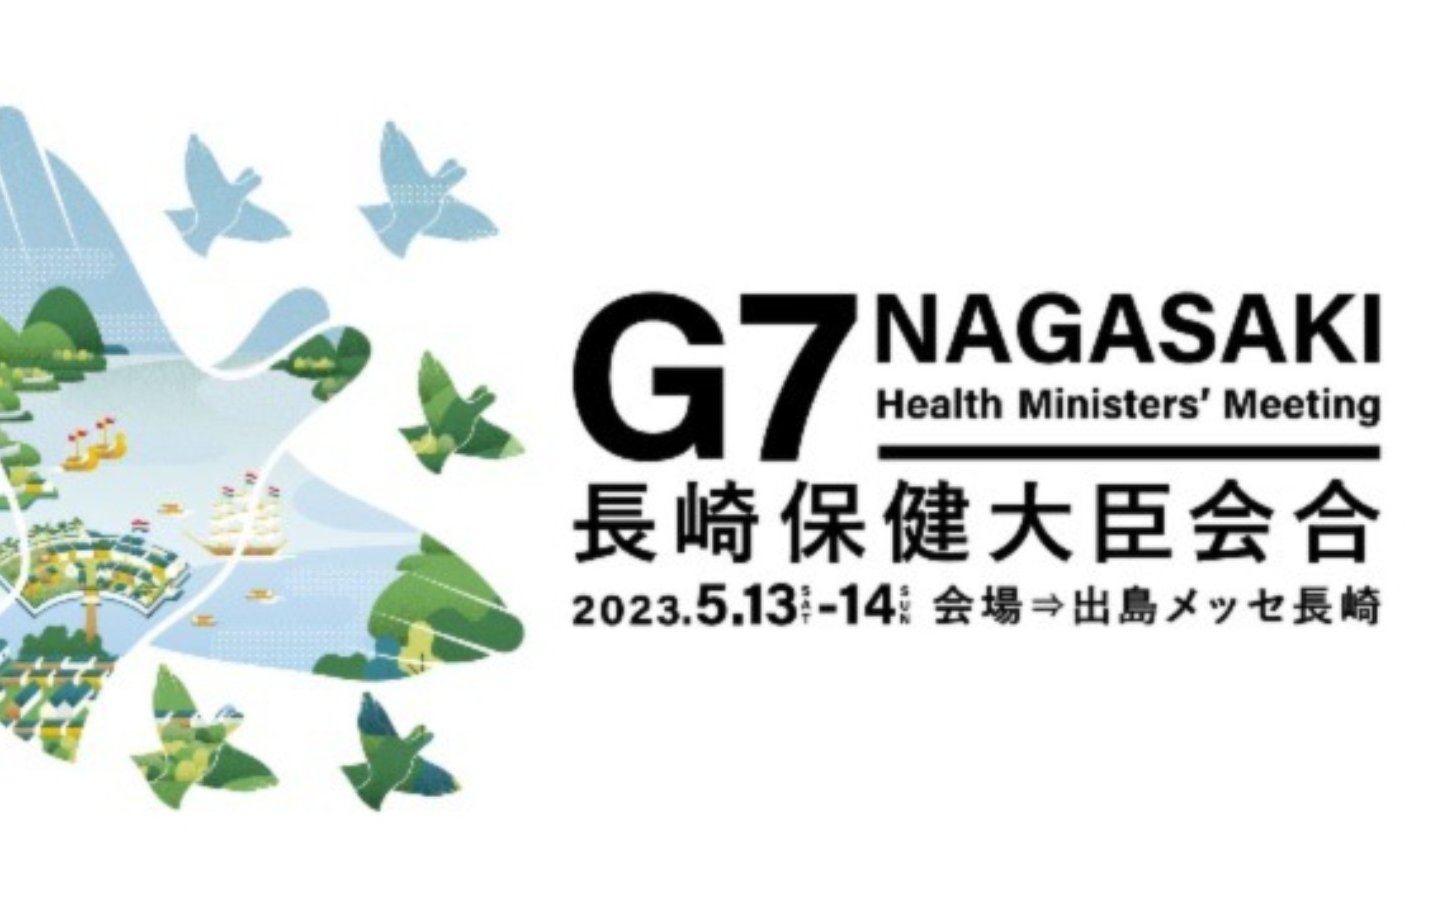 G7 Nagasaki Health Ministers' Meeting